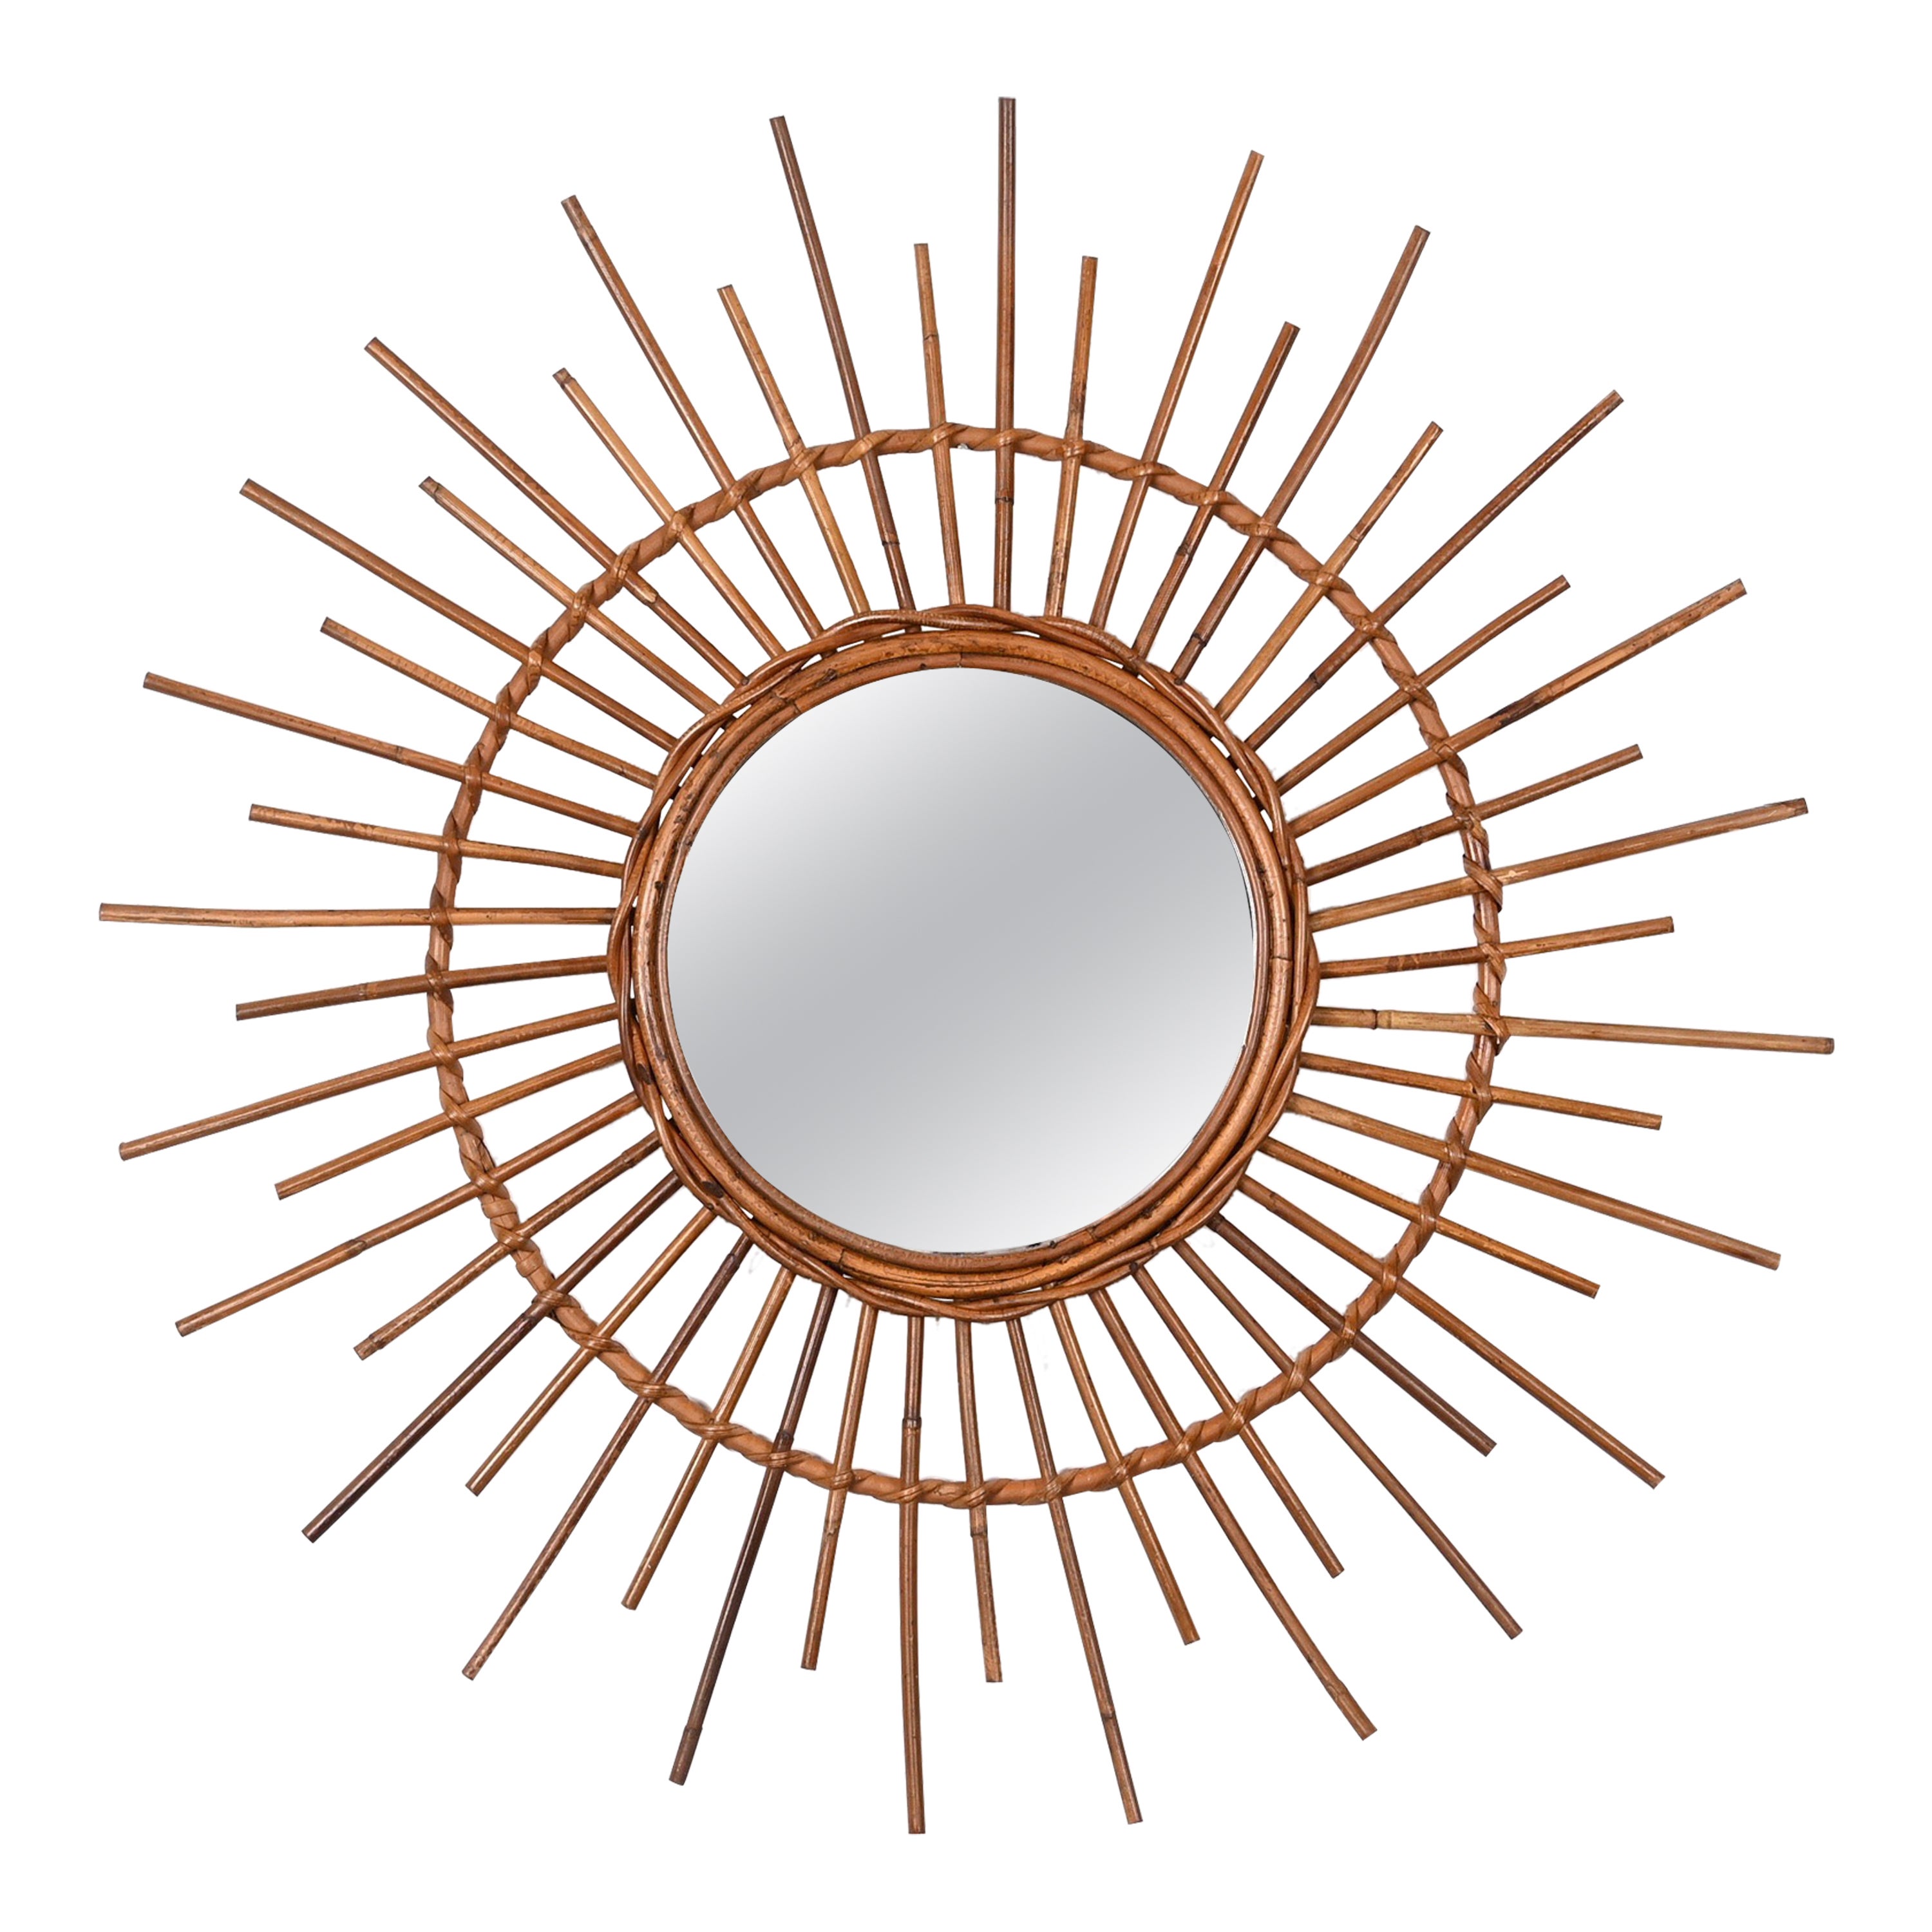 Midcentury Sun-Shaped Rattan and Bamboo Italian Round Mirror, 1950s